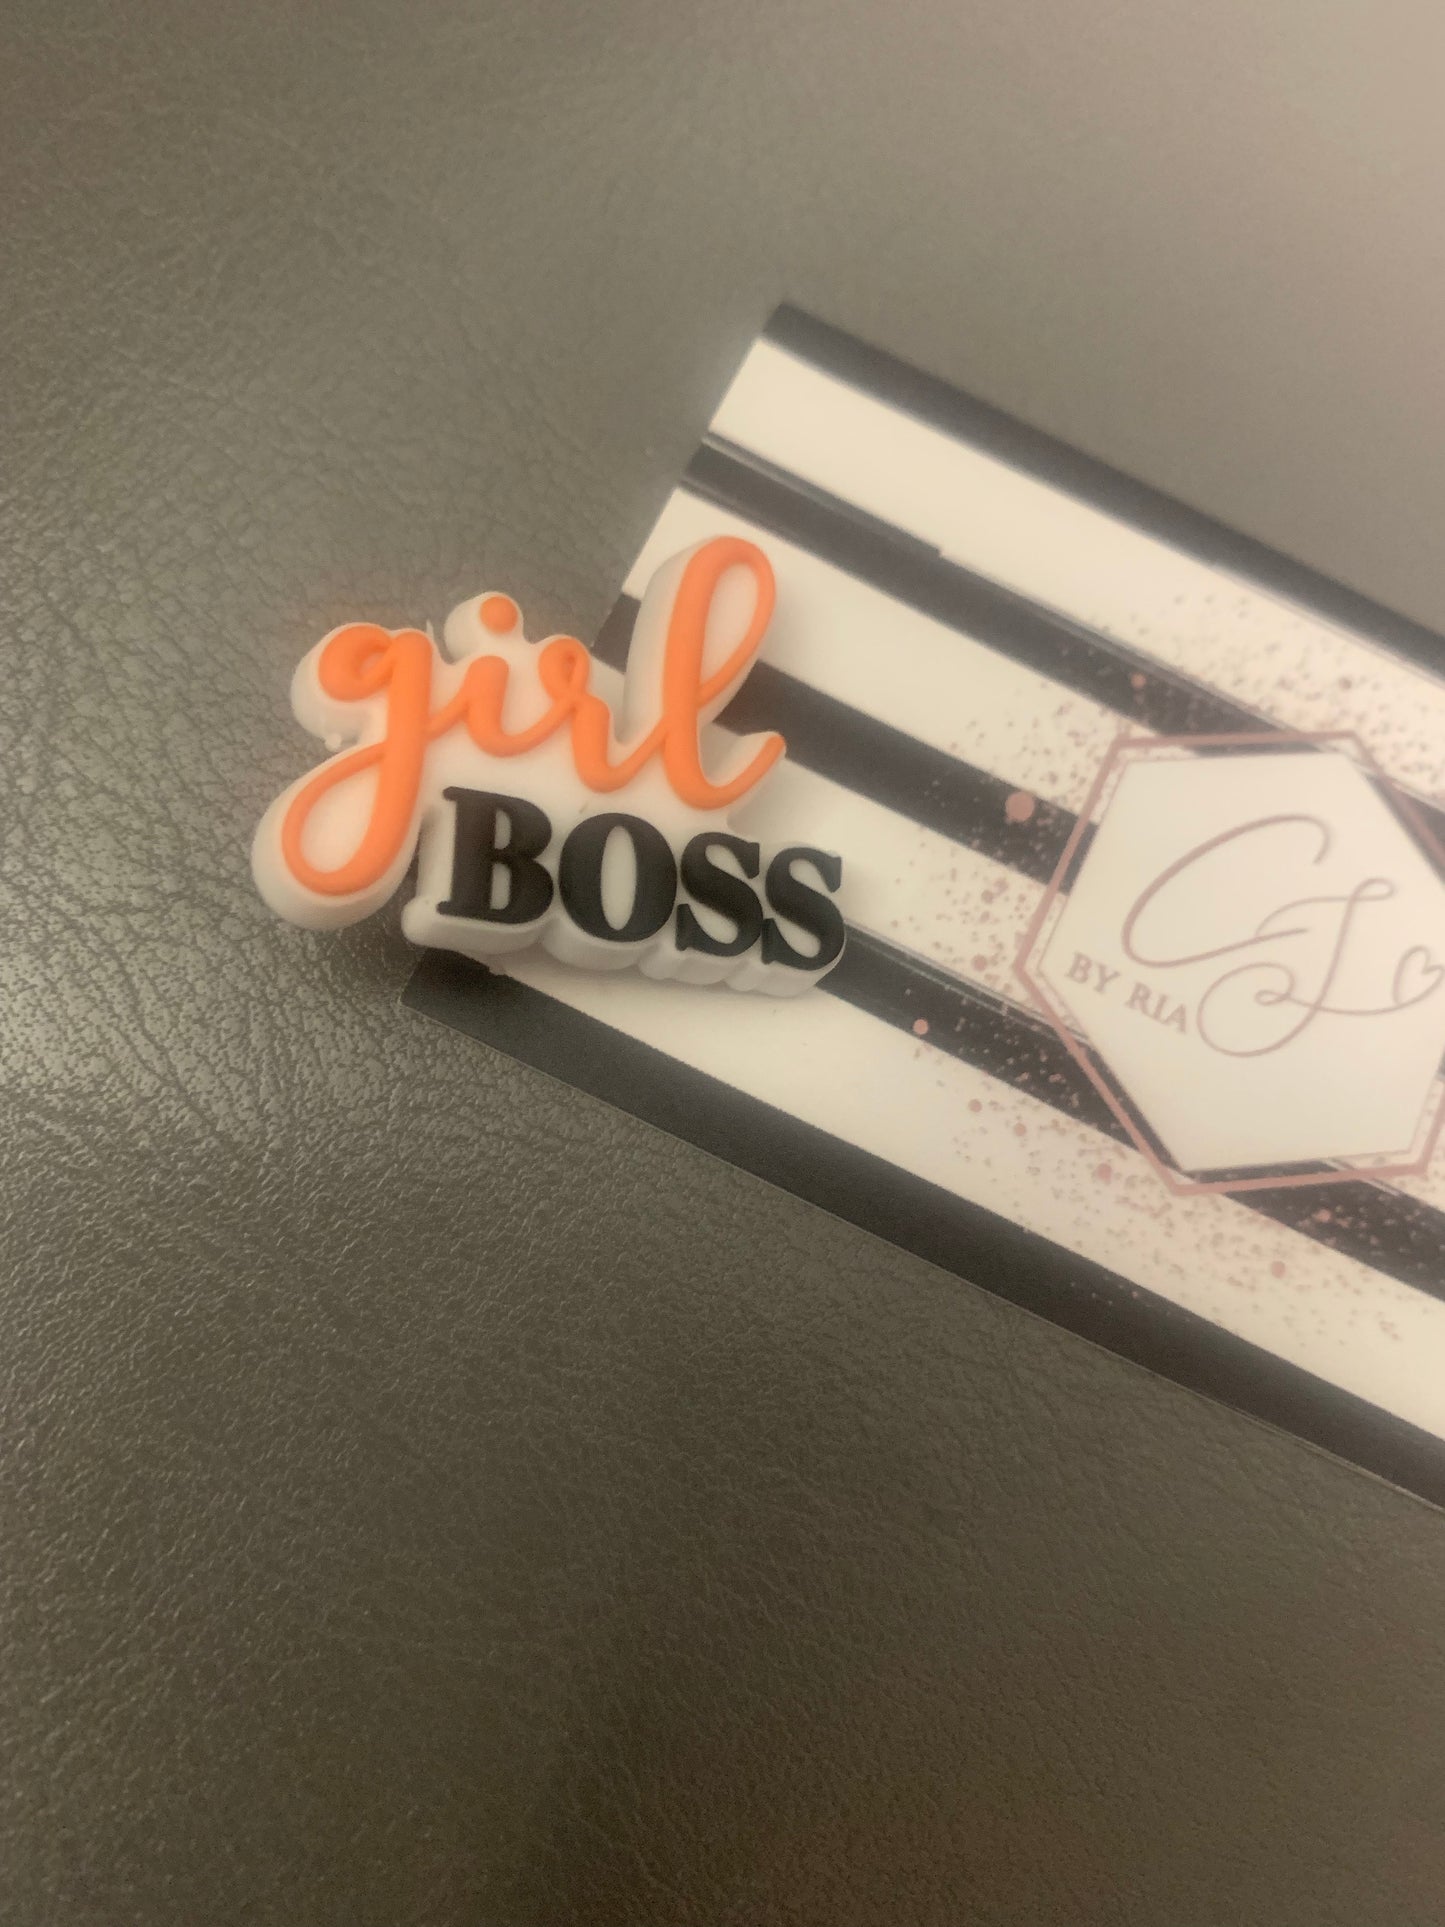 Girl Boss Croc/Shoe Charm